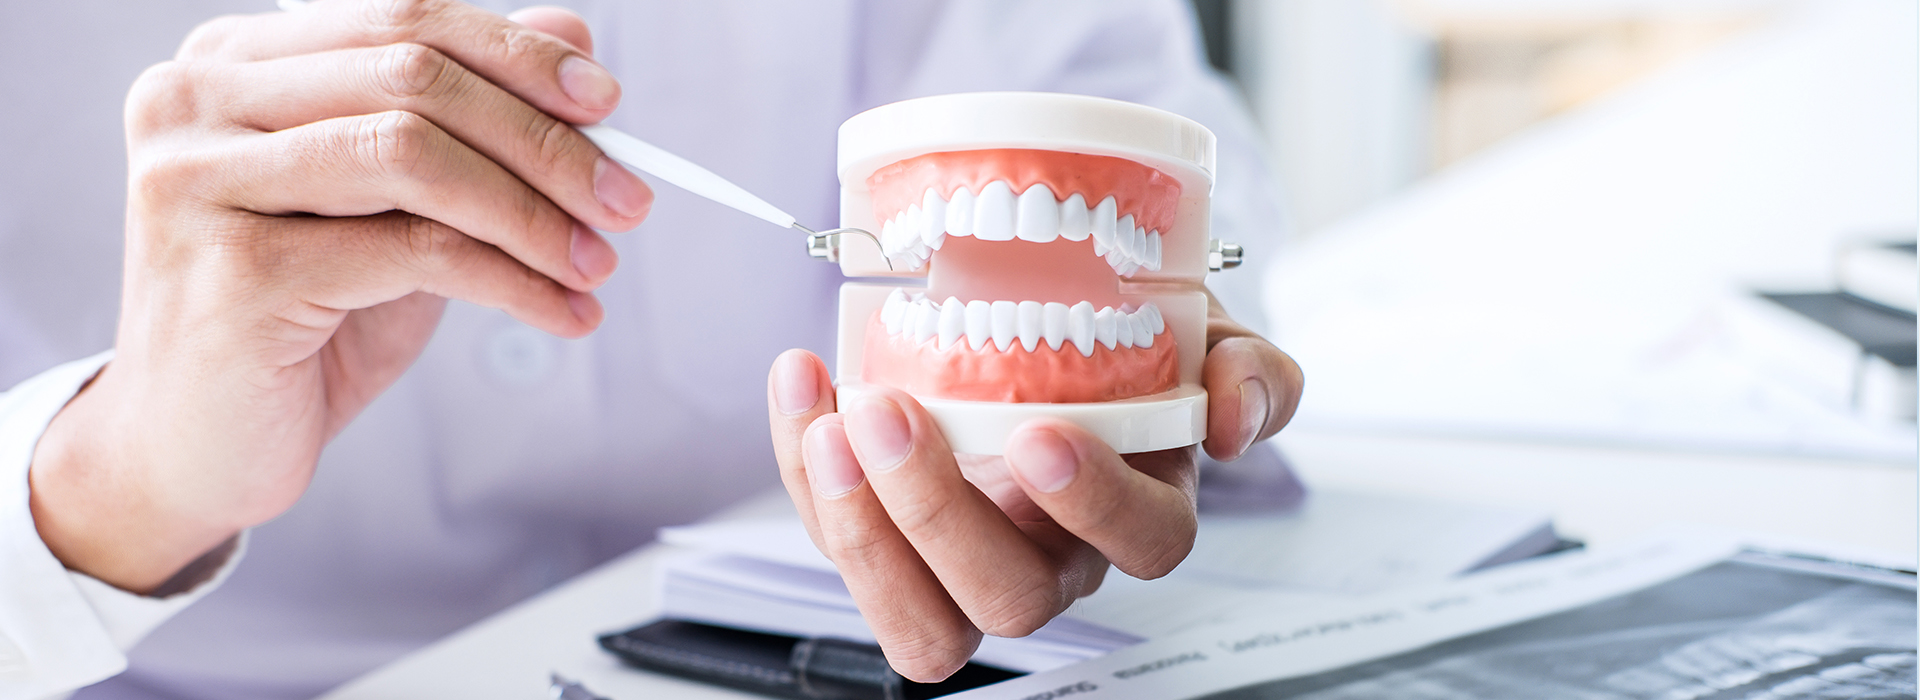 Park Street Dental Associates | Preventative Program, Teeth Whitening and Extractions